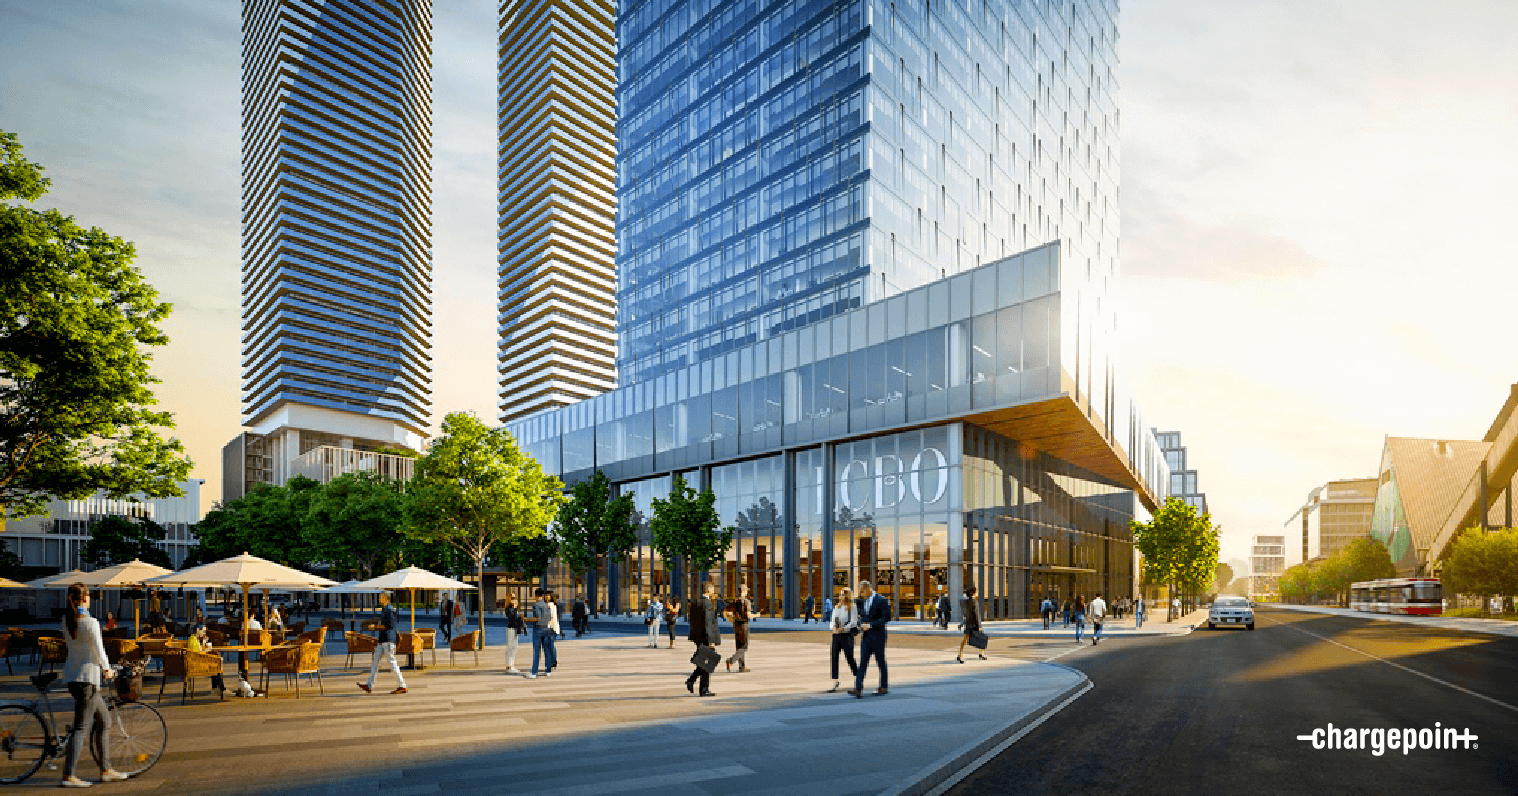 Menkes development in Toronto